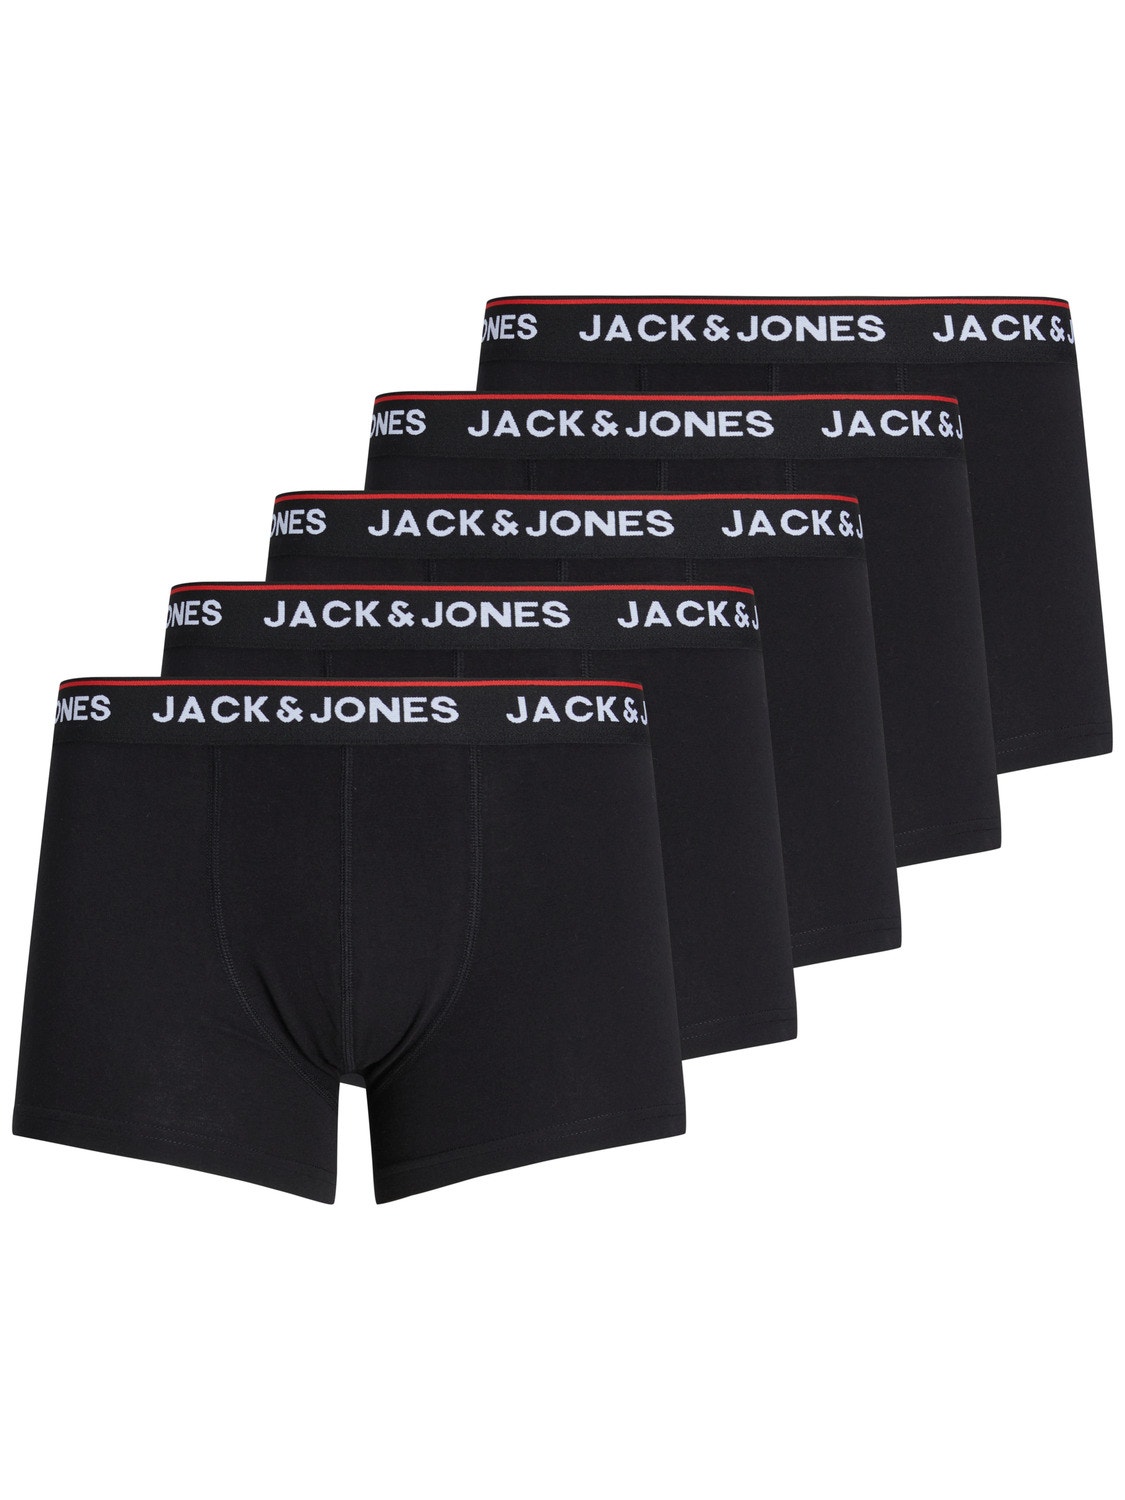 Jack & Jones 5 Trunks -Black - 12217070